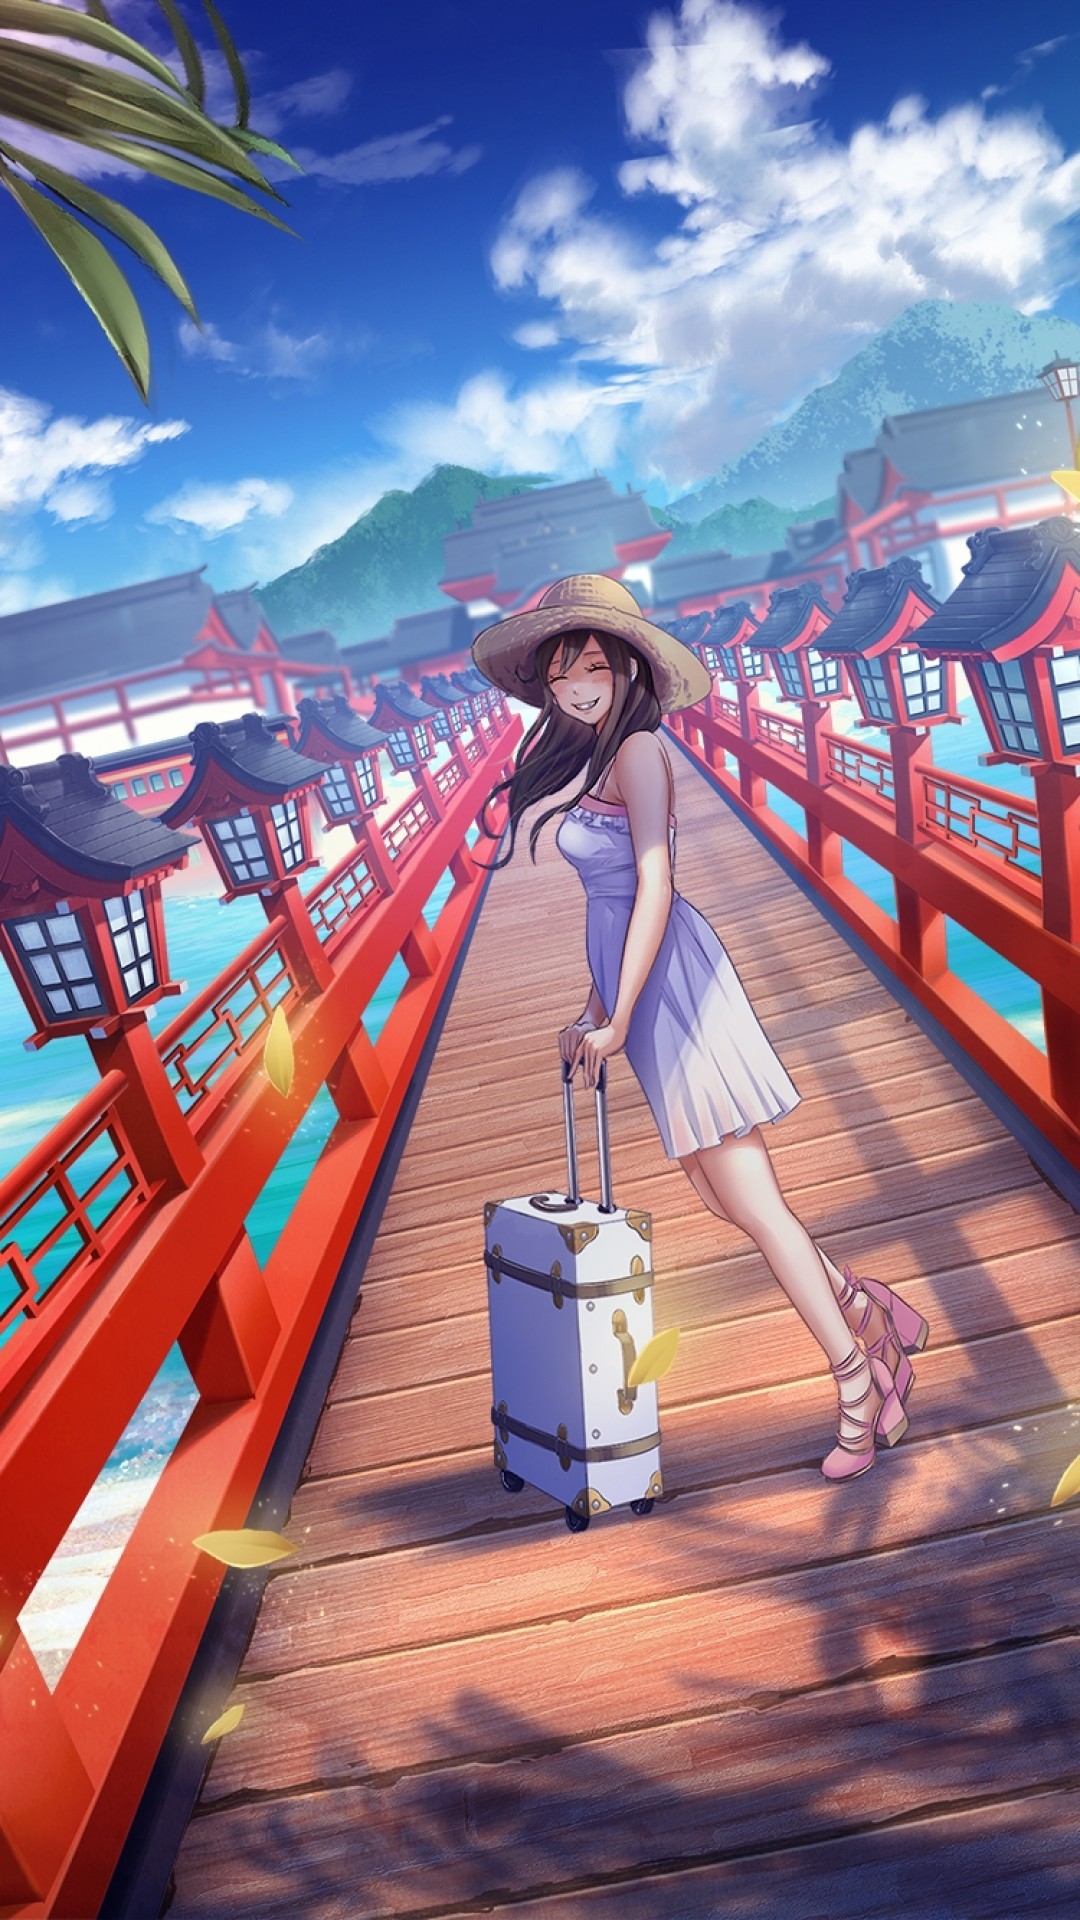 1080x1920 Anime Girl, Summer, Bridge, Japan Traditional Buildings